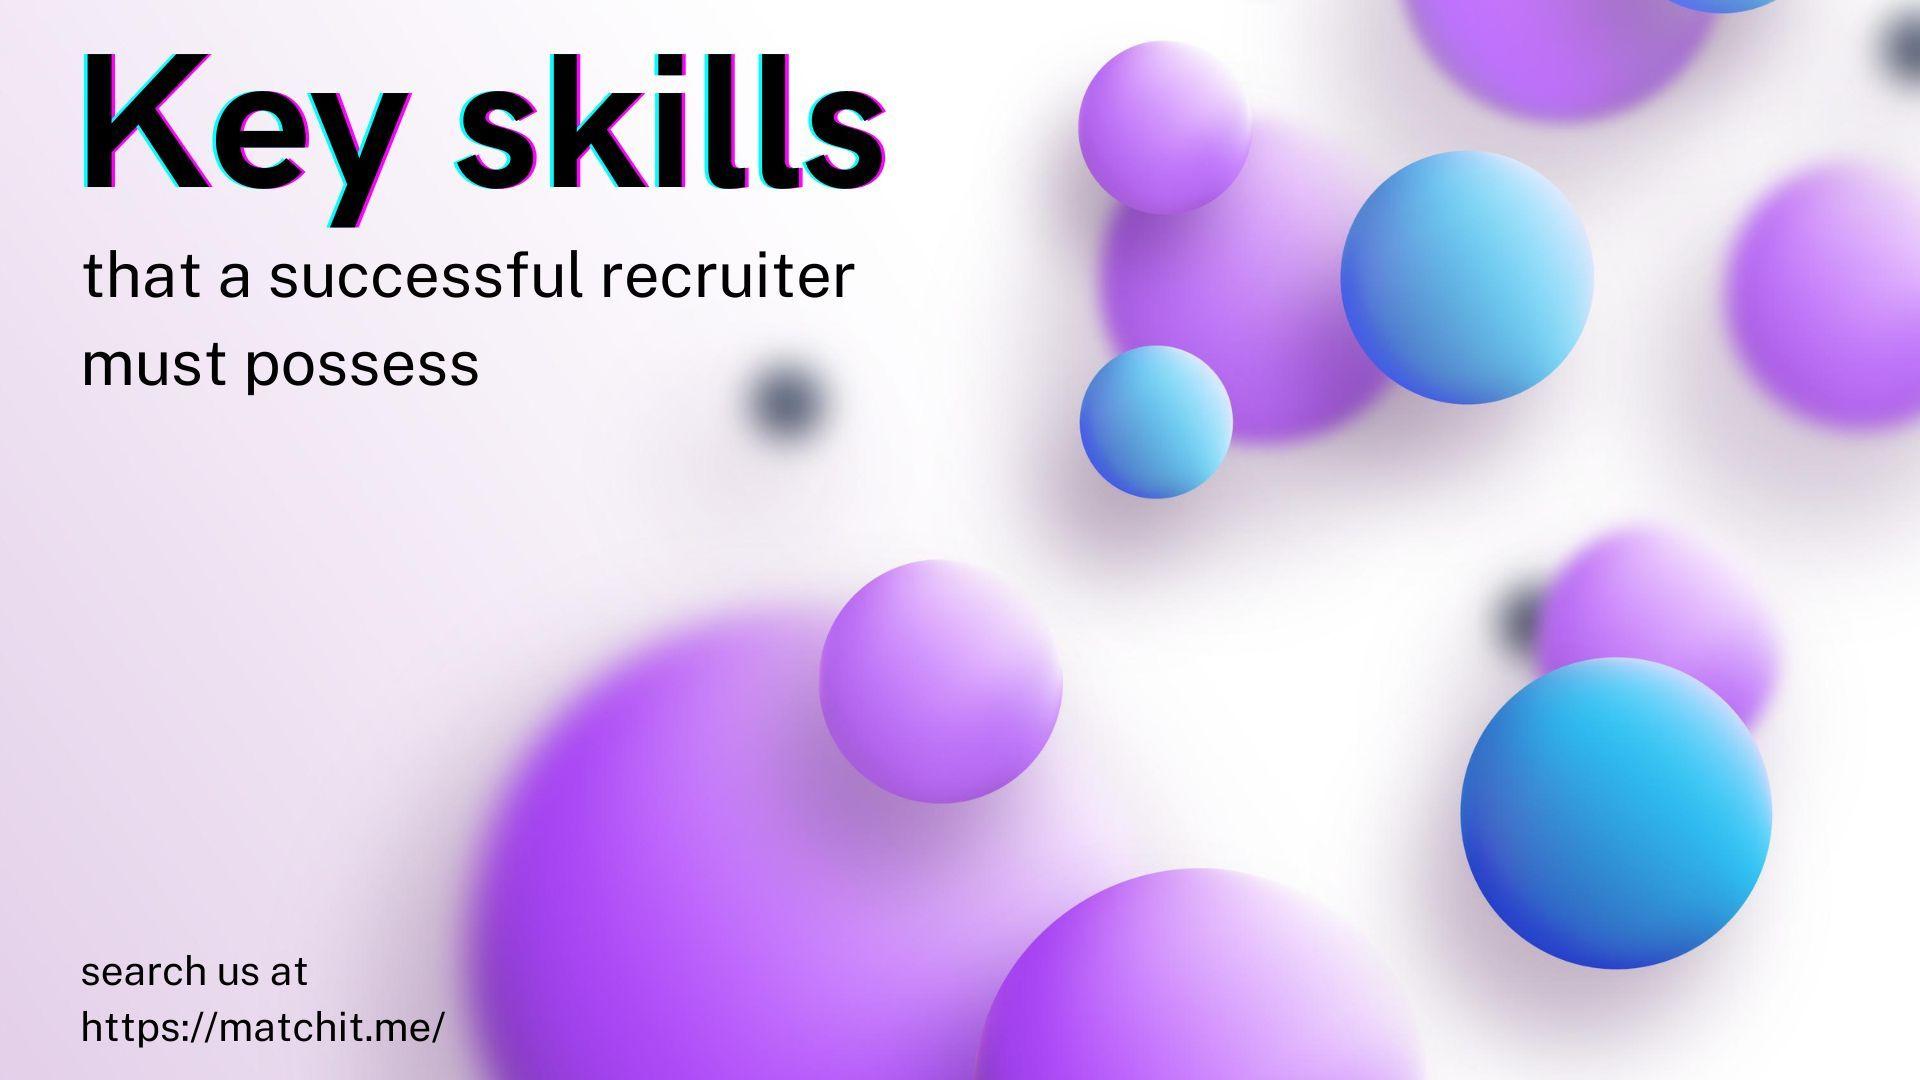 Key skills that a successful recruiter must possess